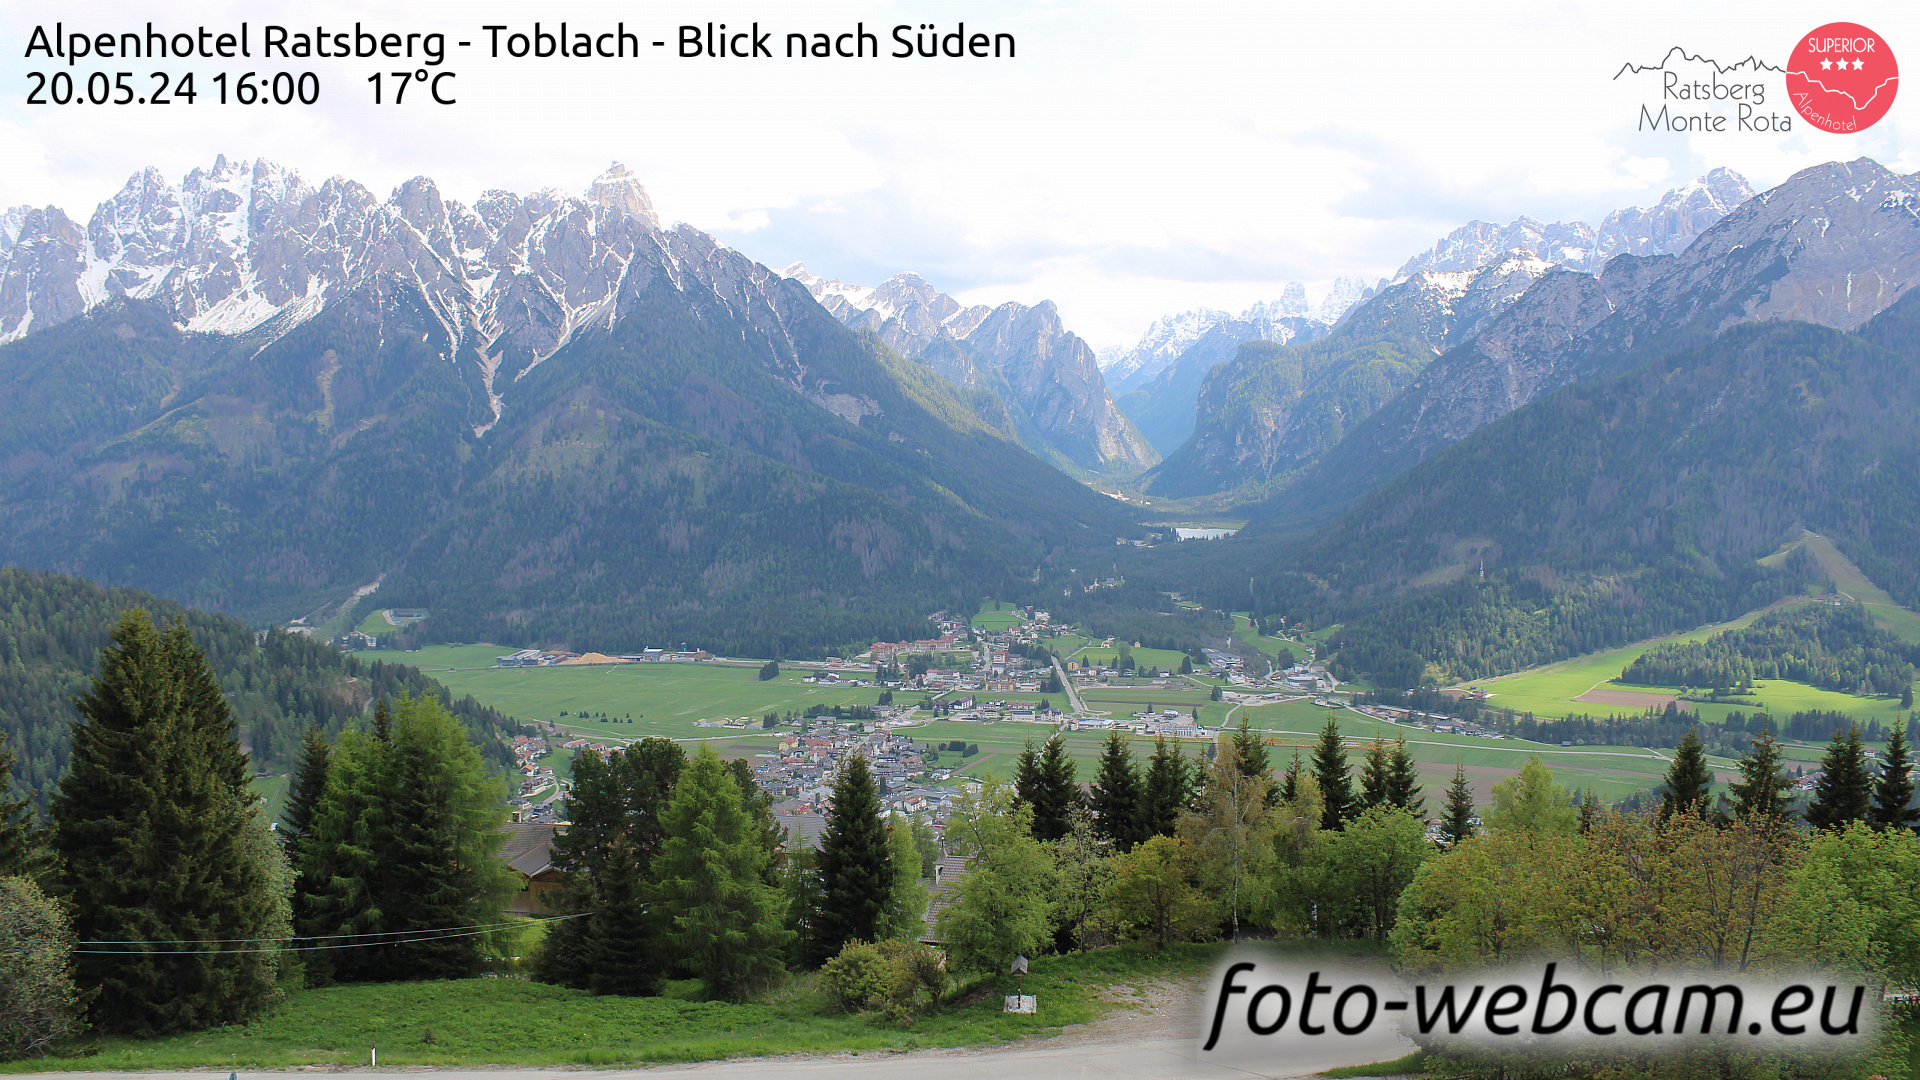 Toblach (Dolomitas) Dom. 16:03